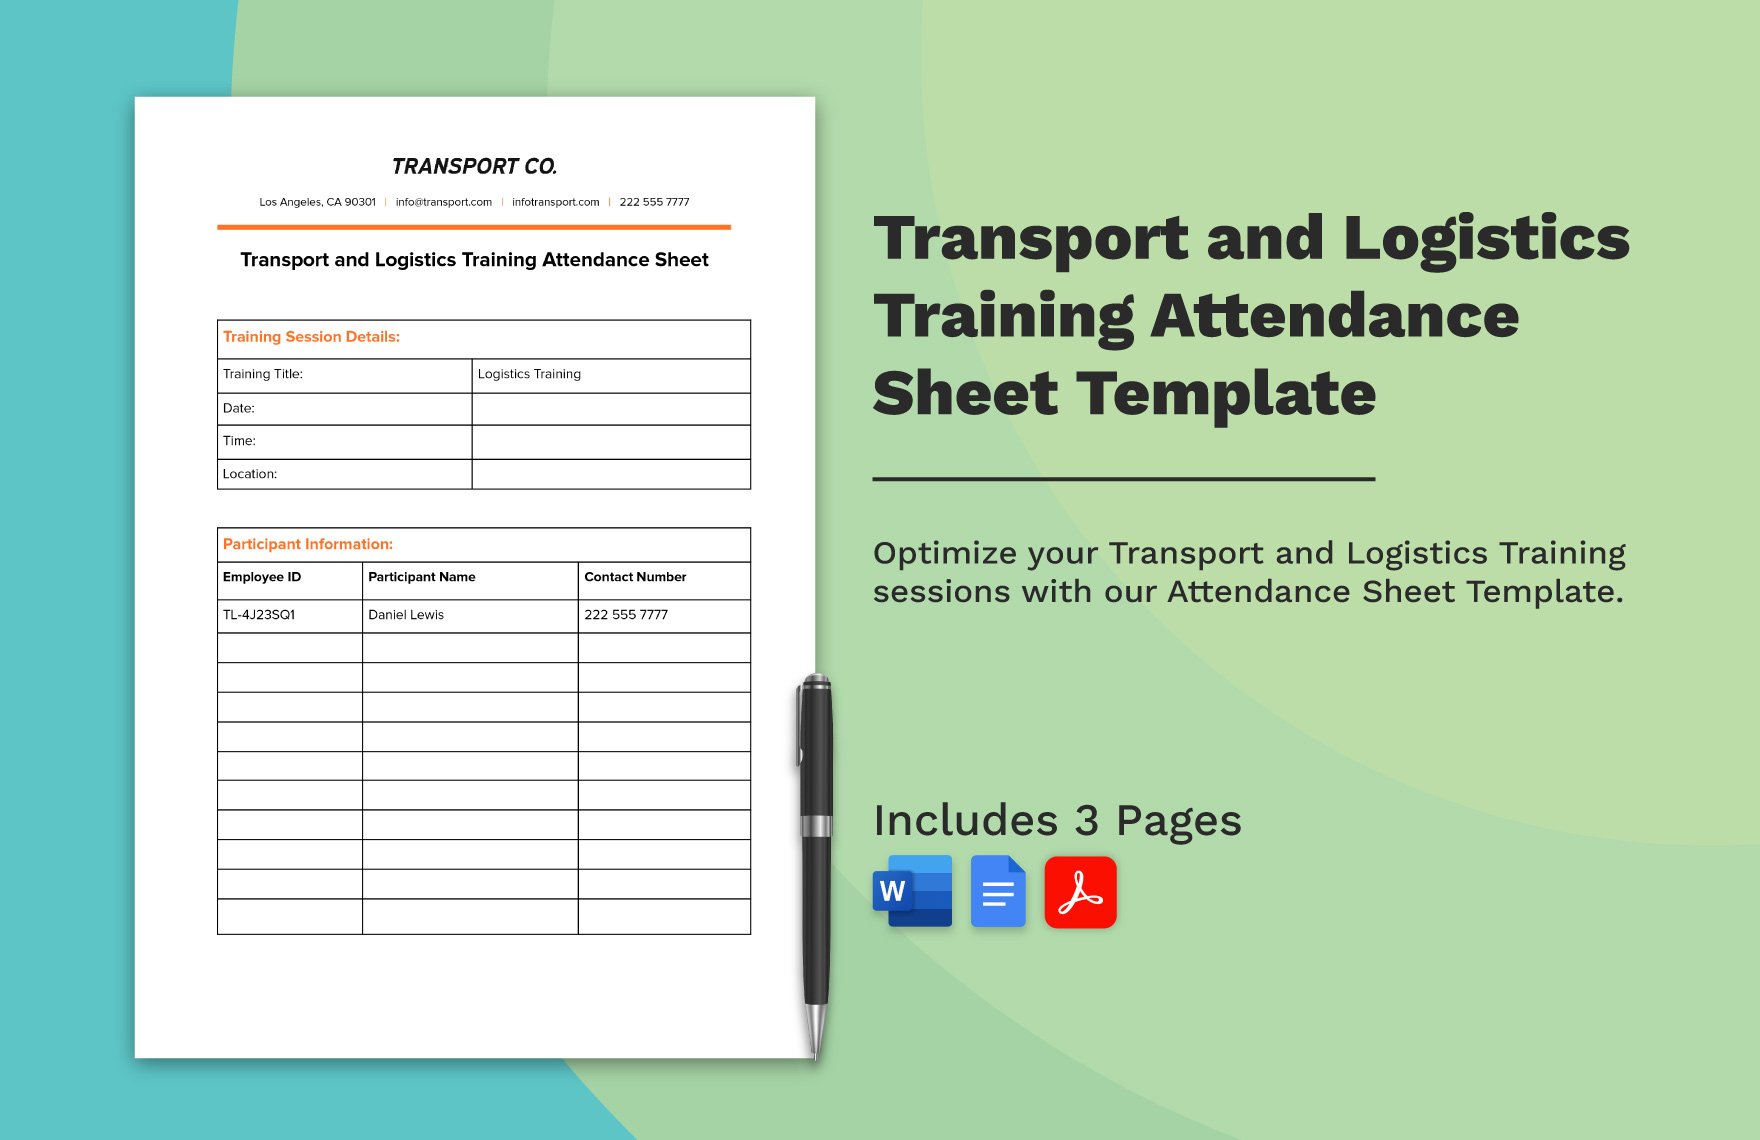 Transport and Logistics Training Attendance Sheet Template